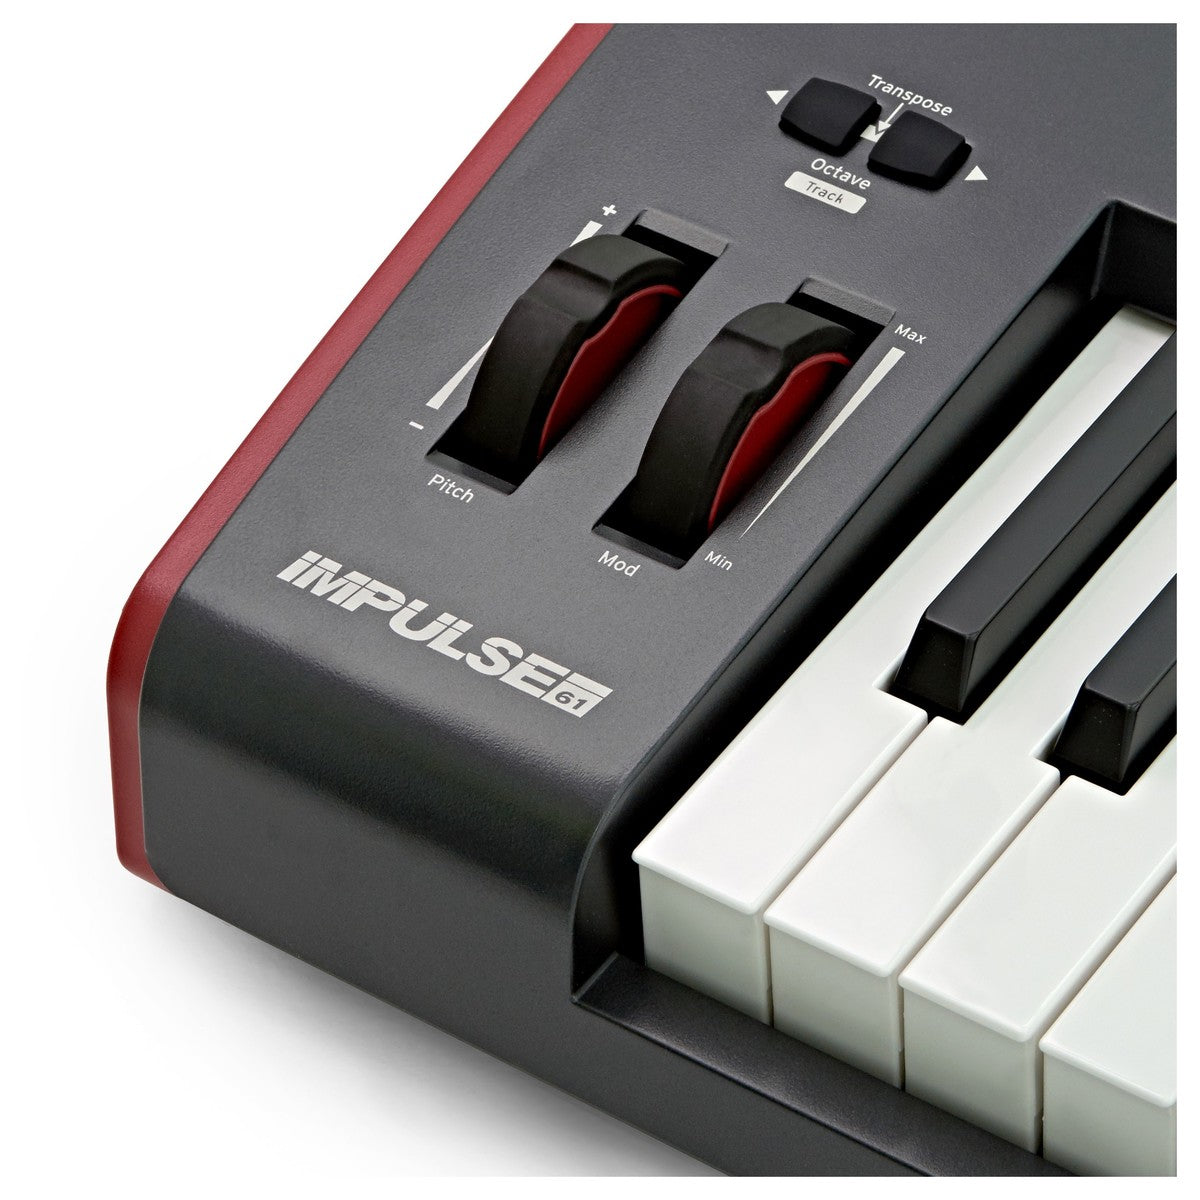 Novation Impulse 61 USB MIDI Controller